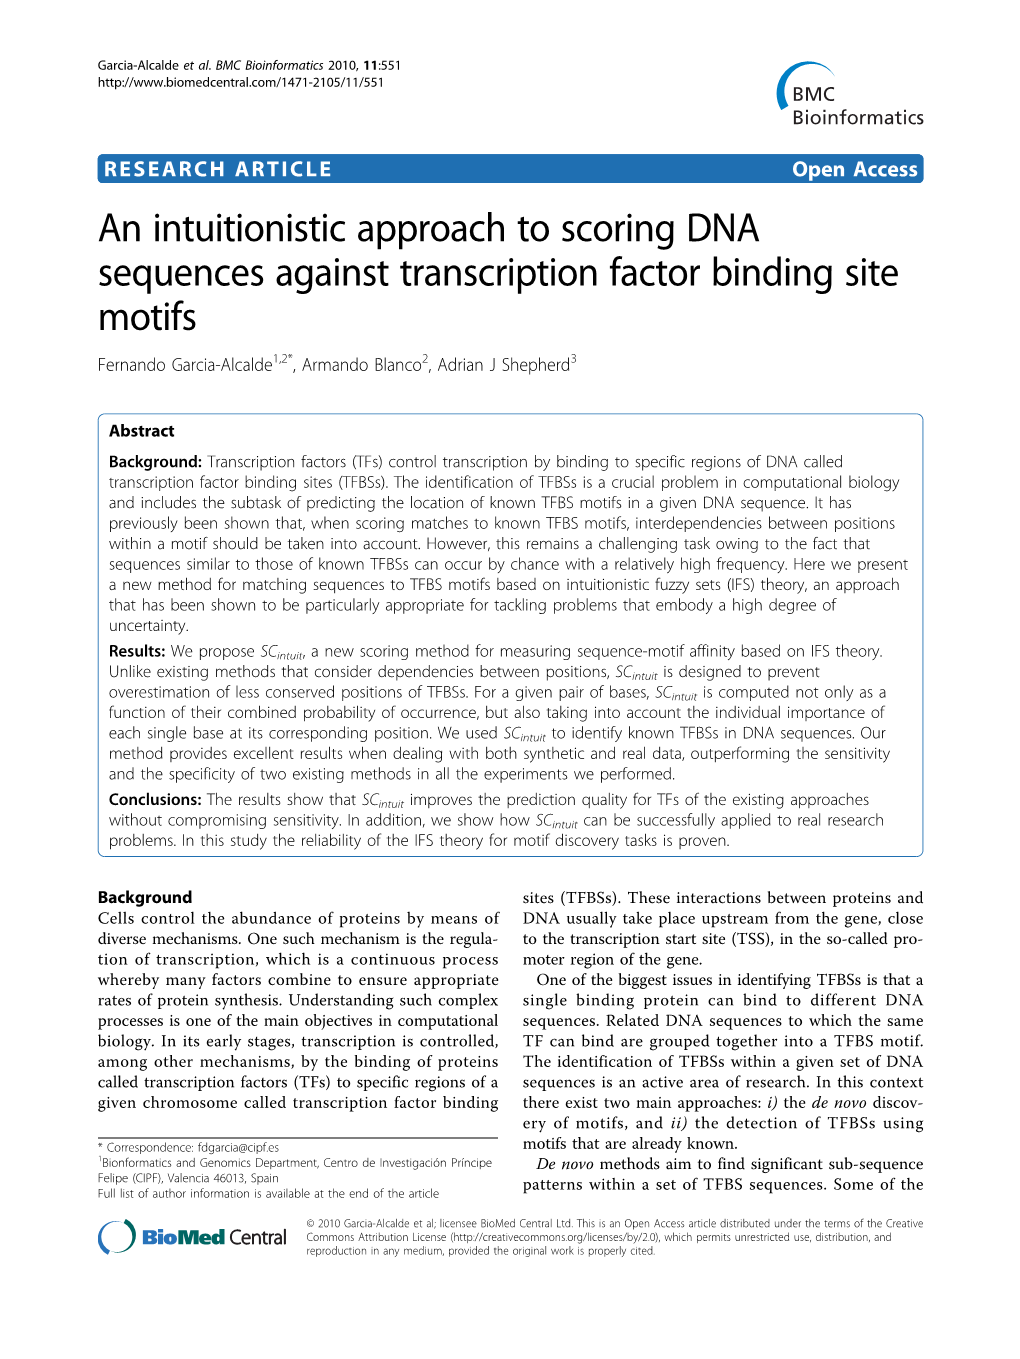 An Intuitionistic Approach to Scoring DNA Sequences Against Transcription Factor Binding Site Motifs Fernando Garcia-Alcalde1,2*, Armando Blanco2, Adrian J Shepherd3